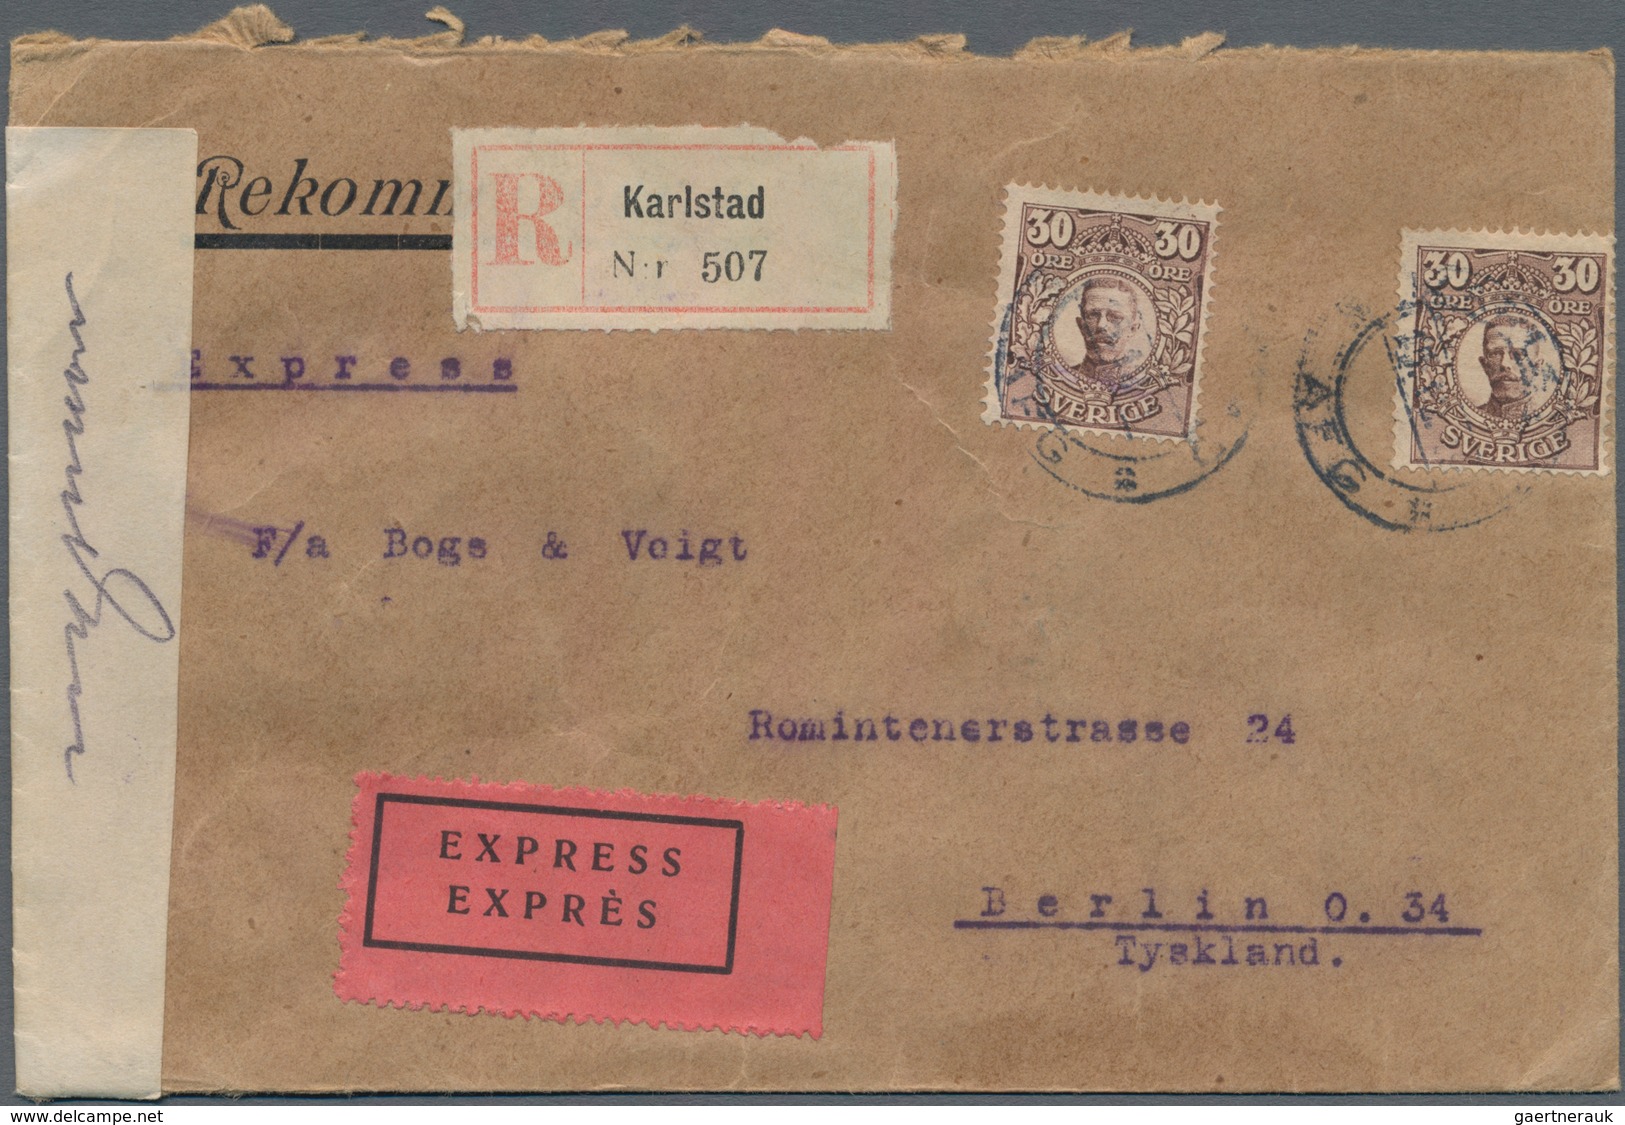 Europa: 1895/1950 (ca.), Turkey, Greece, Sweden, England Ec. Covers (ca. 37, Inc. Some Uprated Stati - Andere-Europa